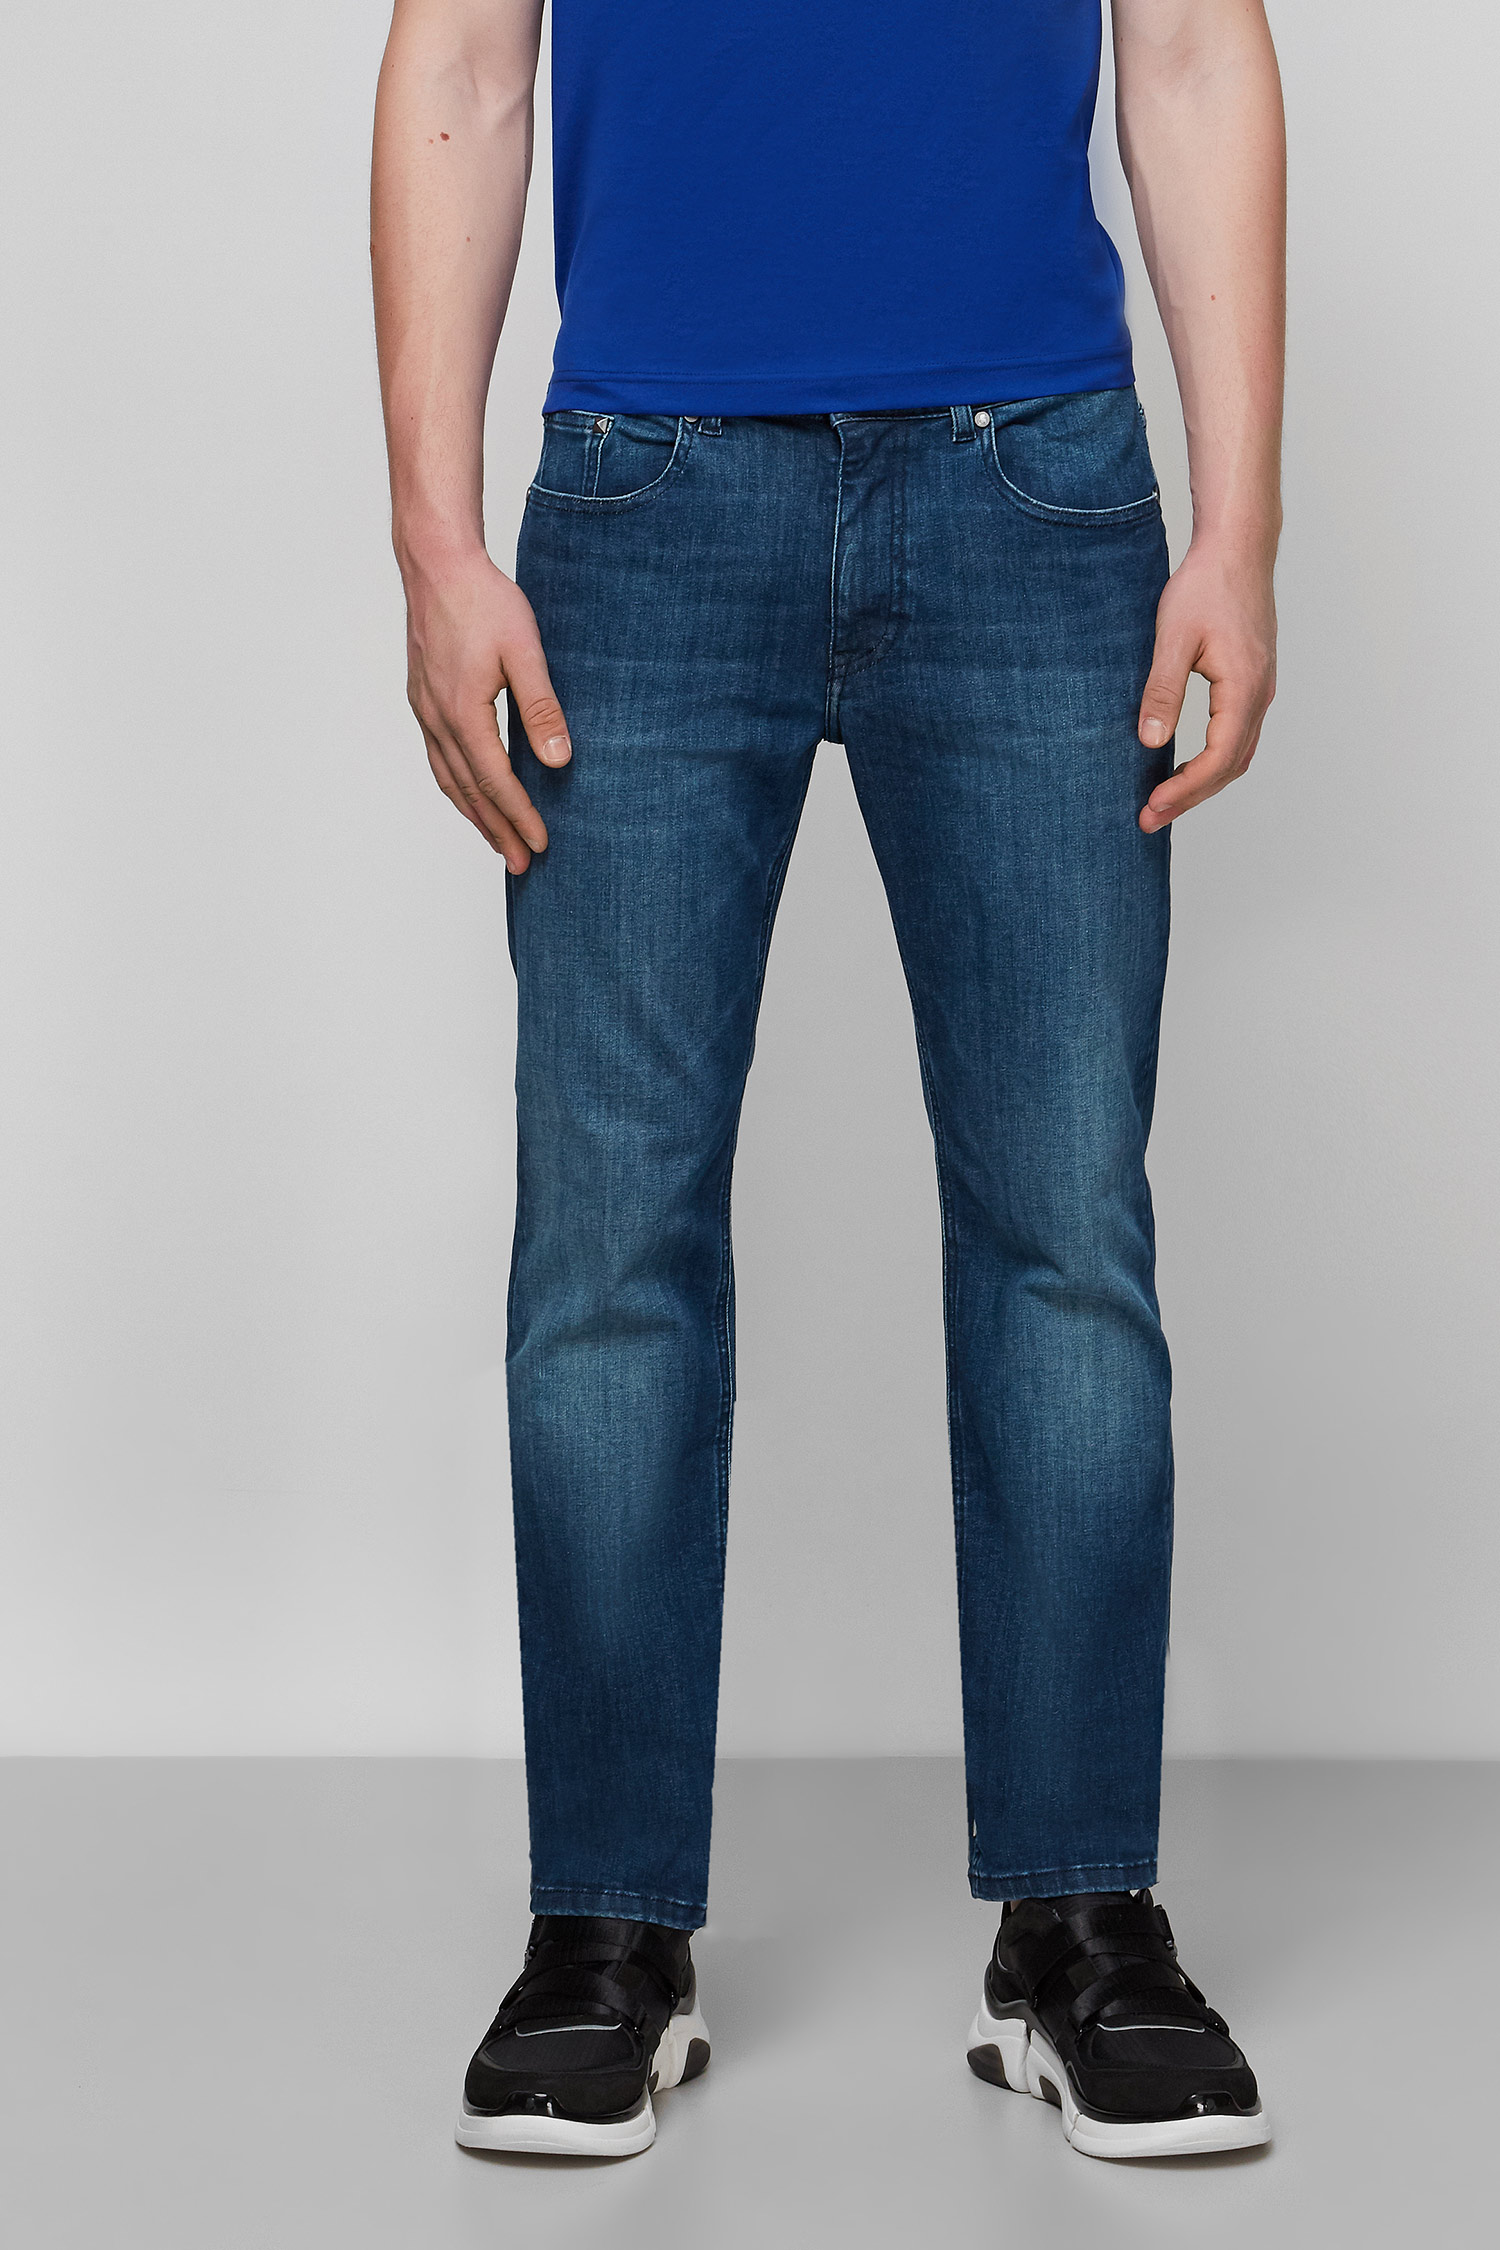 Темно-синие джинсы для парней Karl Lagerfeld 511830.265840;670